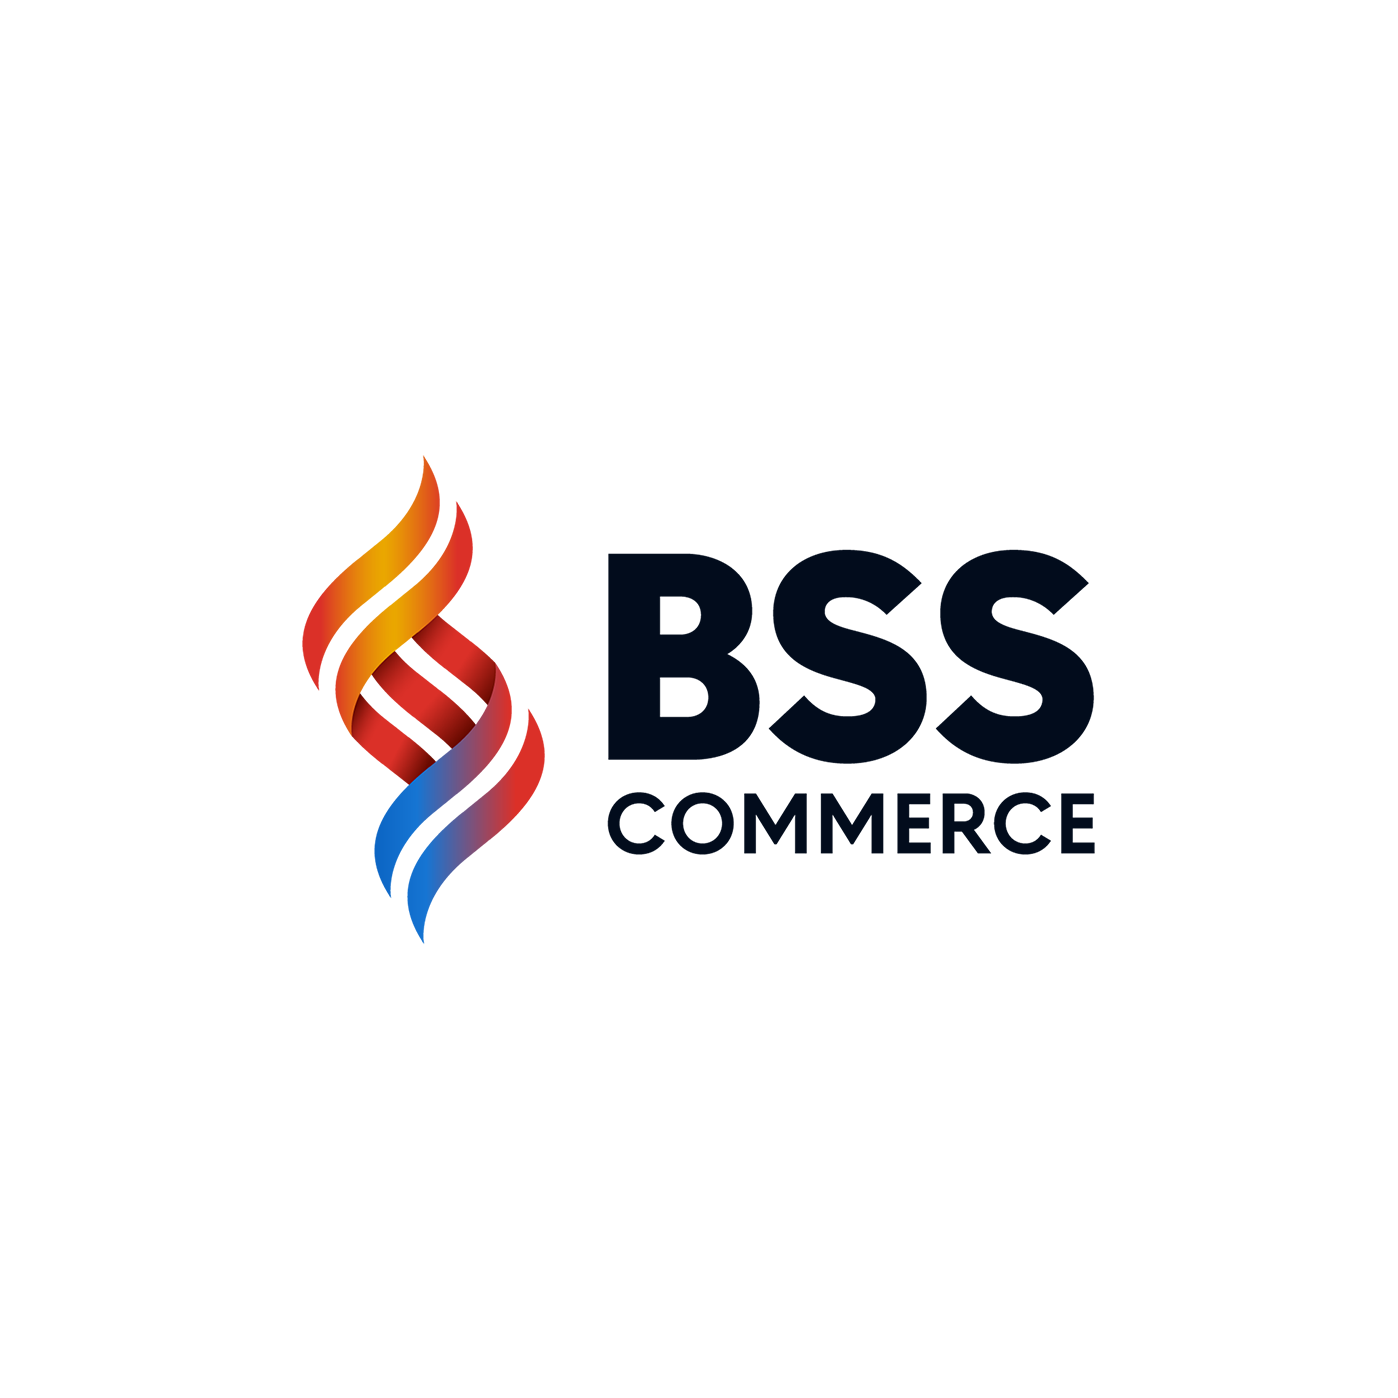 bss_commerce_logo-1